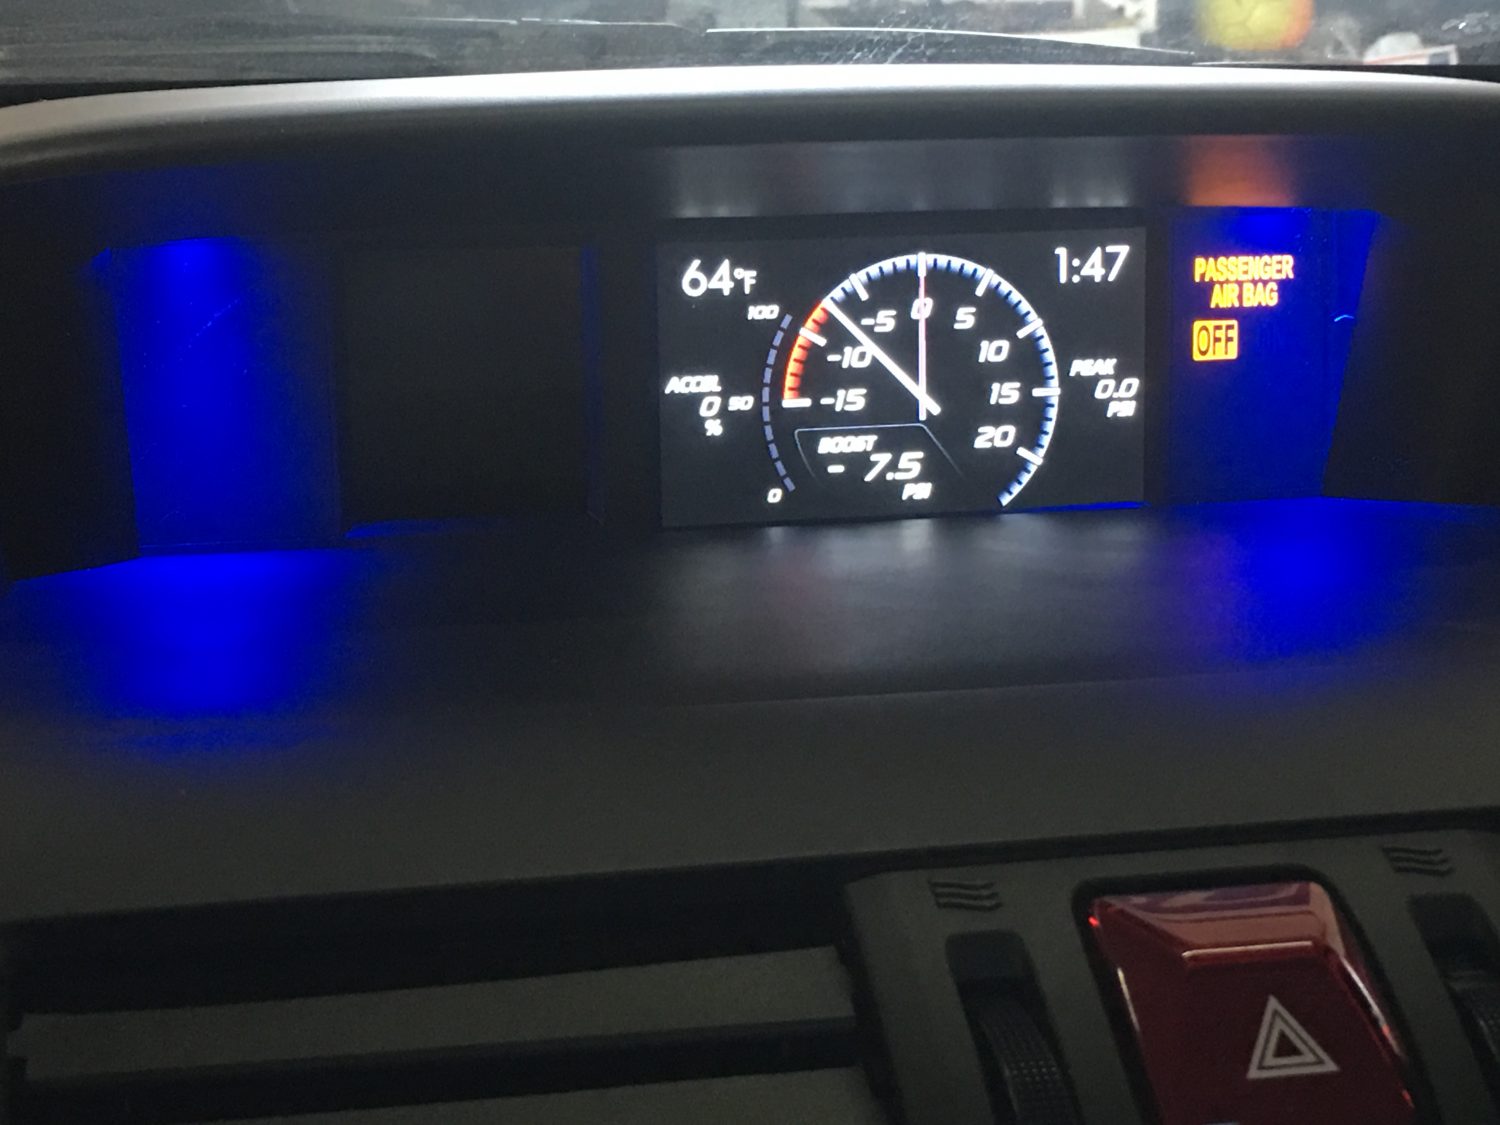 k40 radar detector alert leds on a Subaru STI